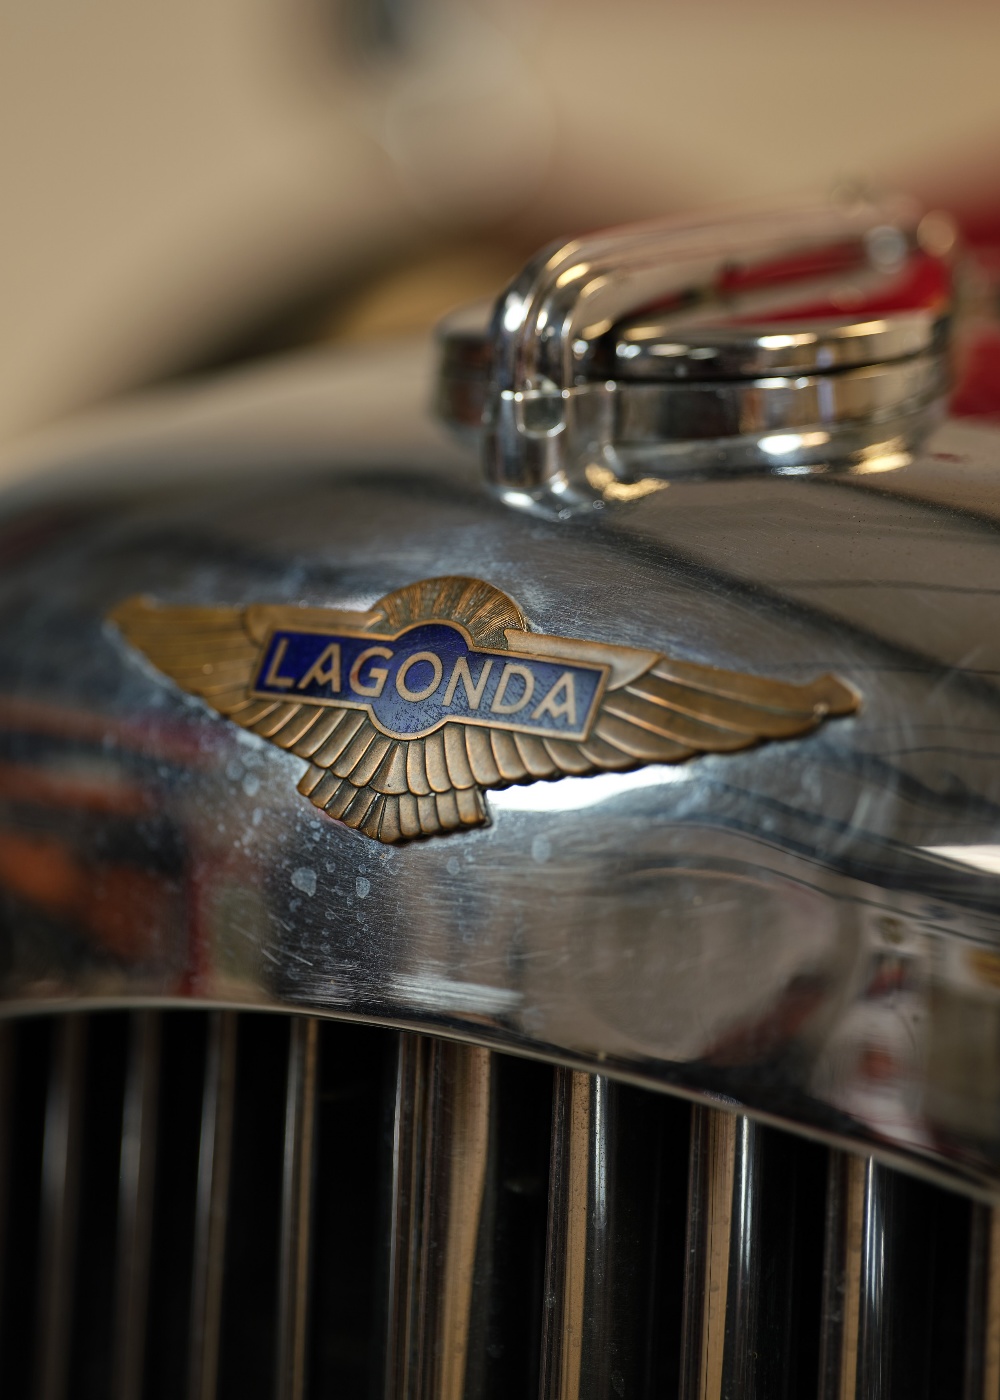 1939 Lagonda V12 Sports Saloon - Image 25 of 38